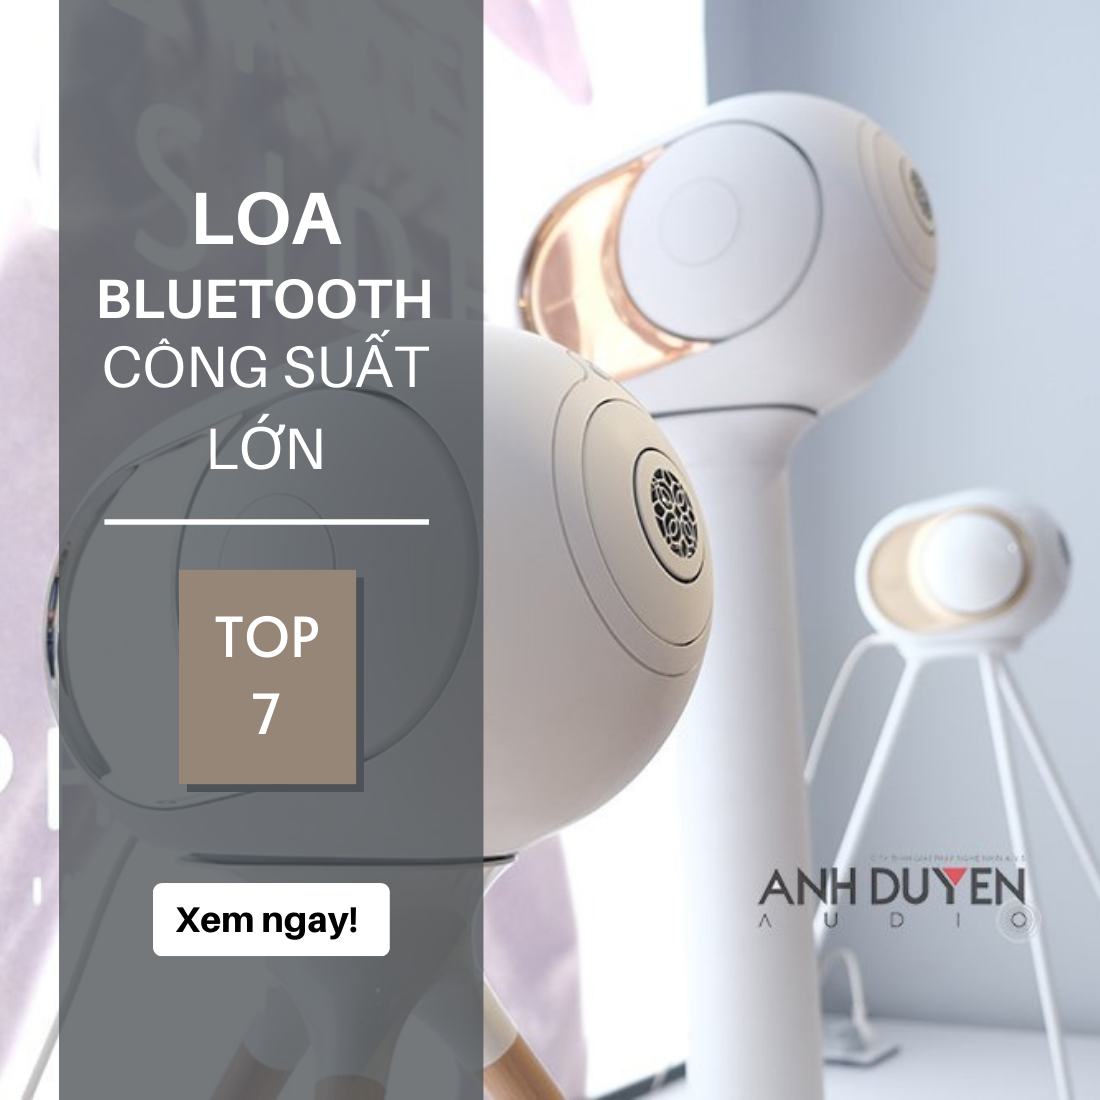 top-7-loa-bluetooth-cong-suat-lon